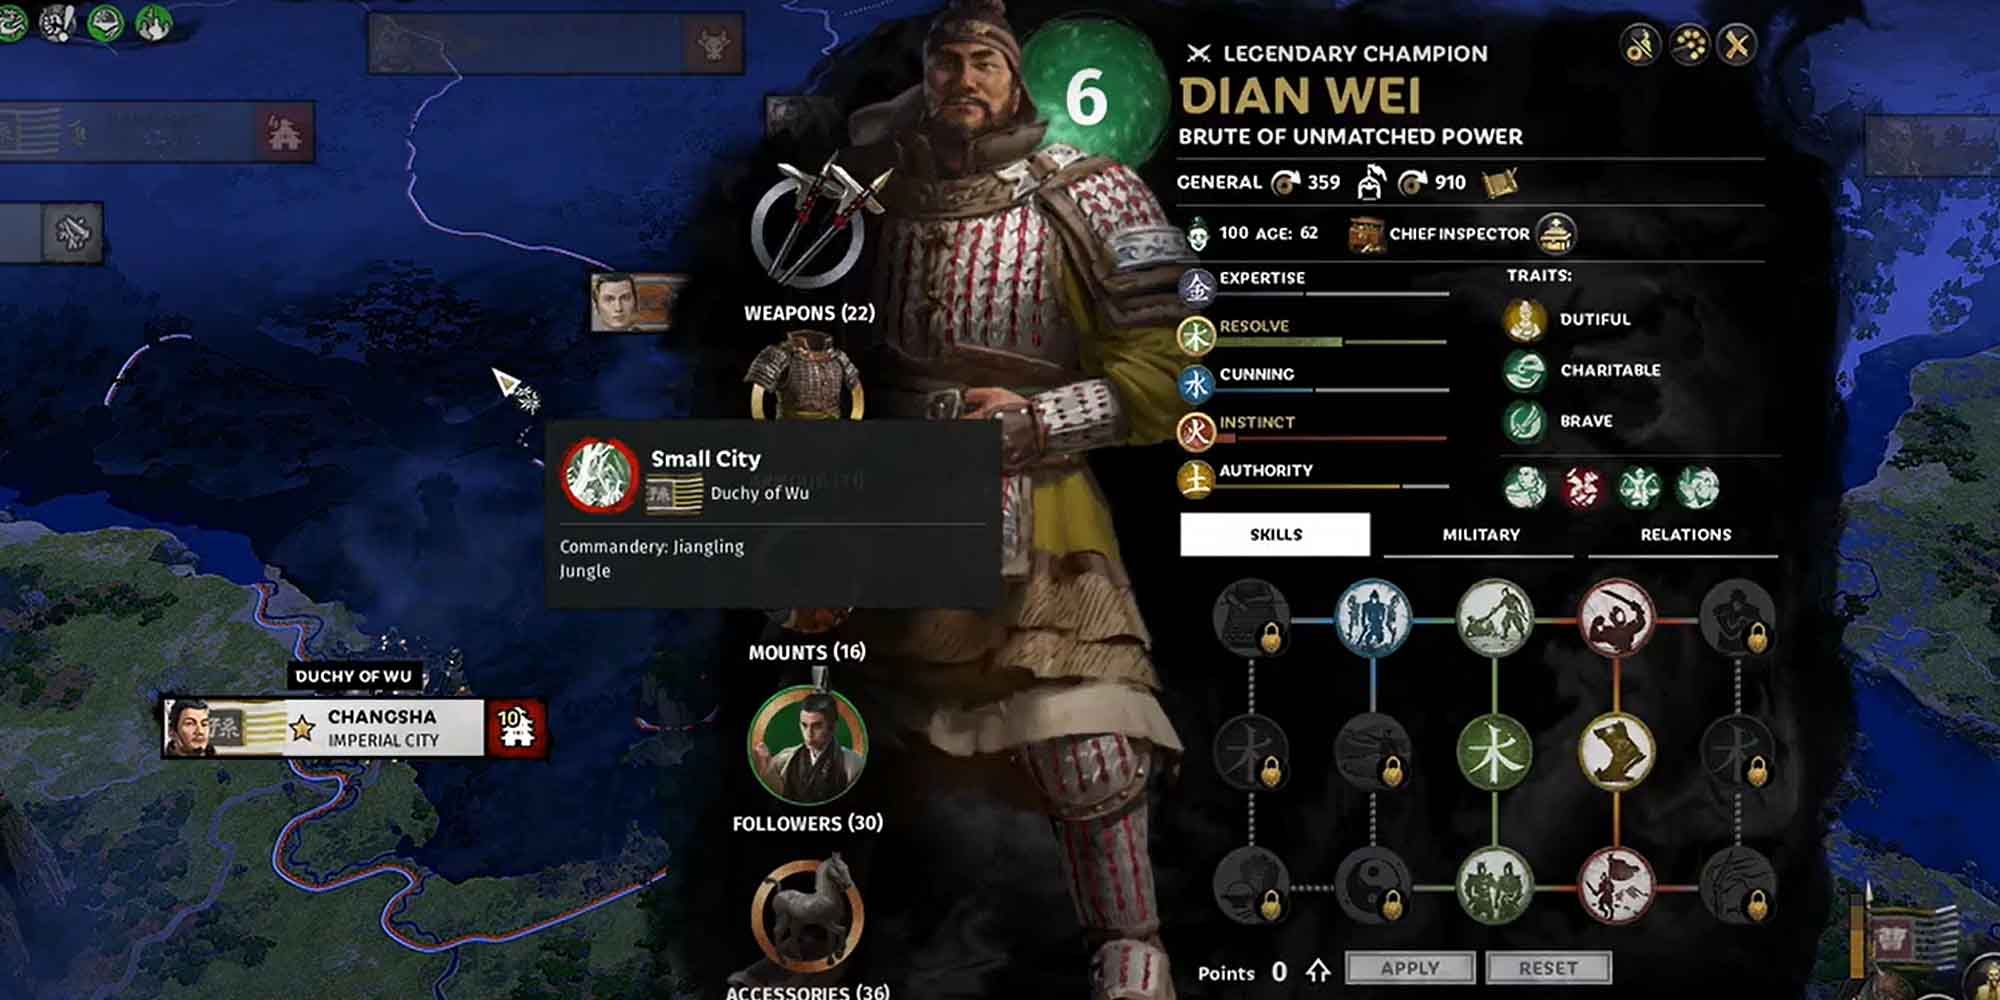 Dian Wei's profile in Total War: Three Kingdoms